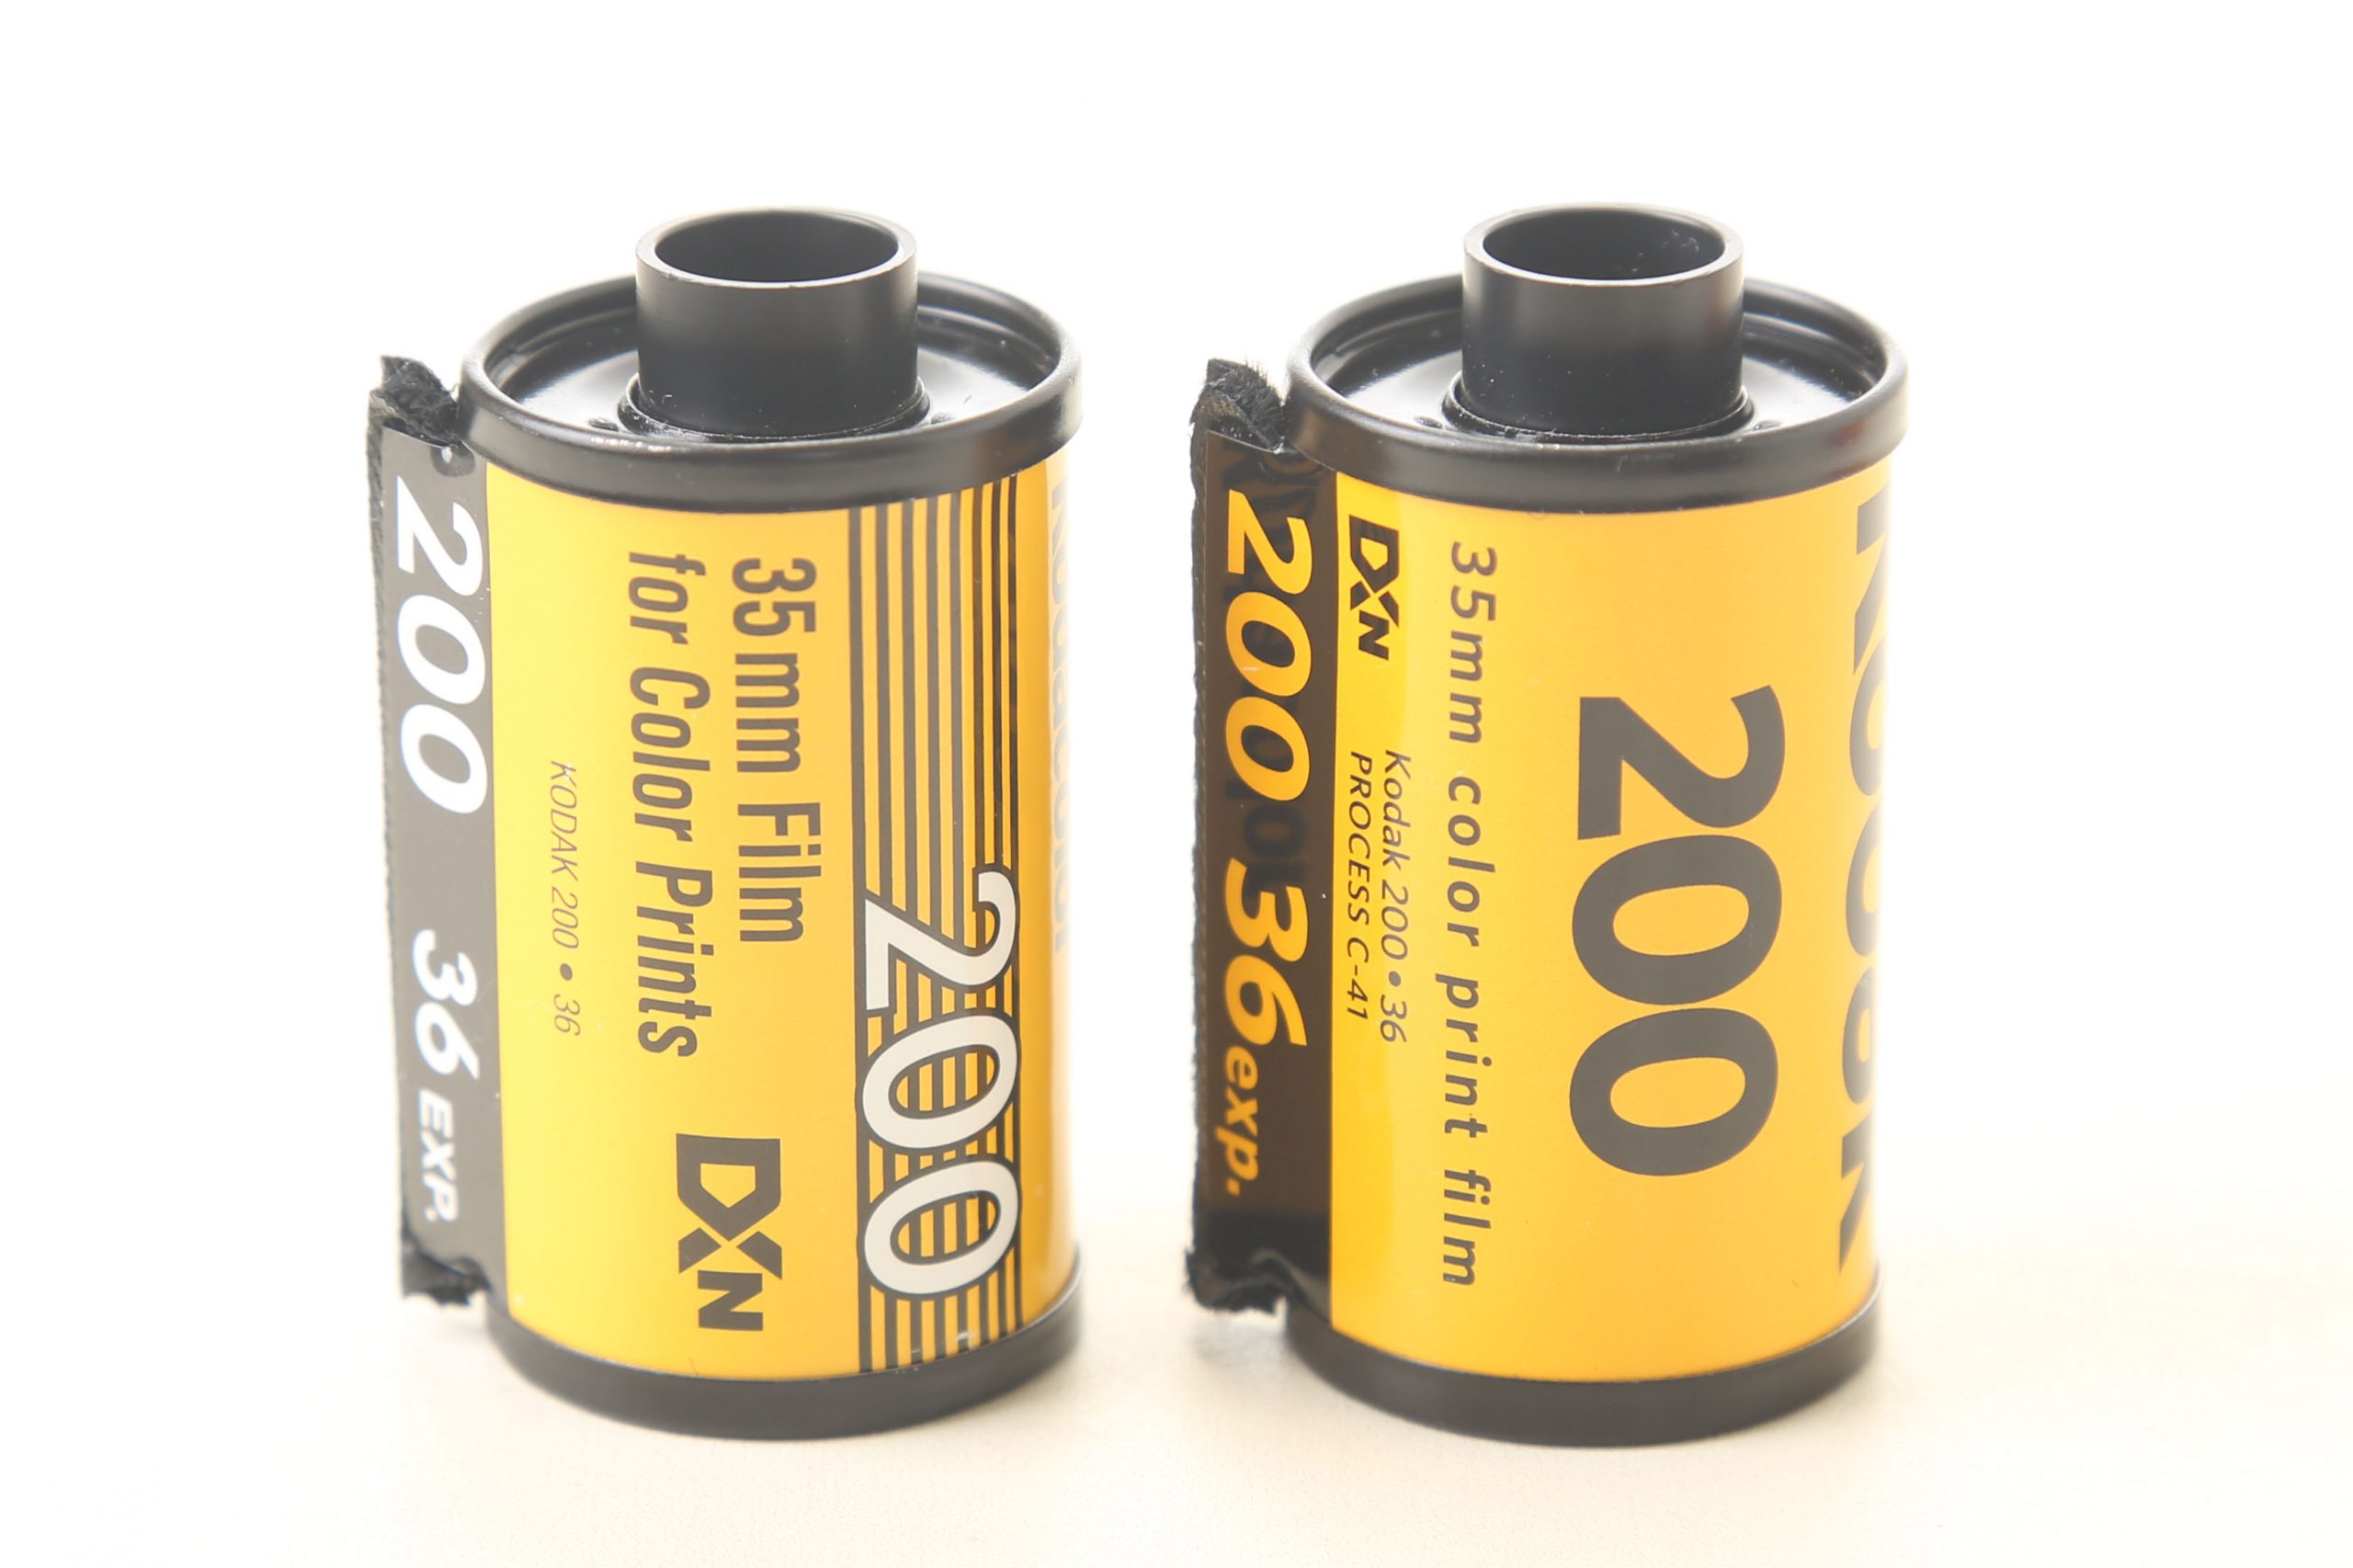 Kodak GOLD 200 VS ColorPlus 200 撮り比べしてみた！【作例多数】